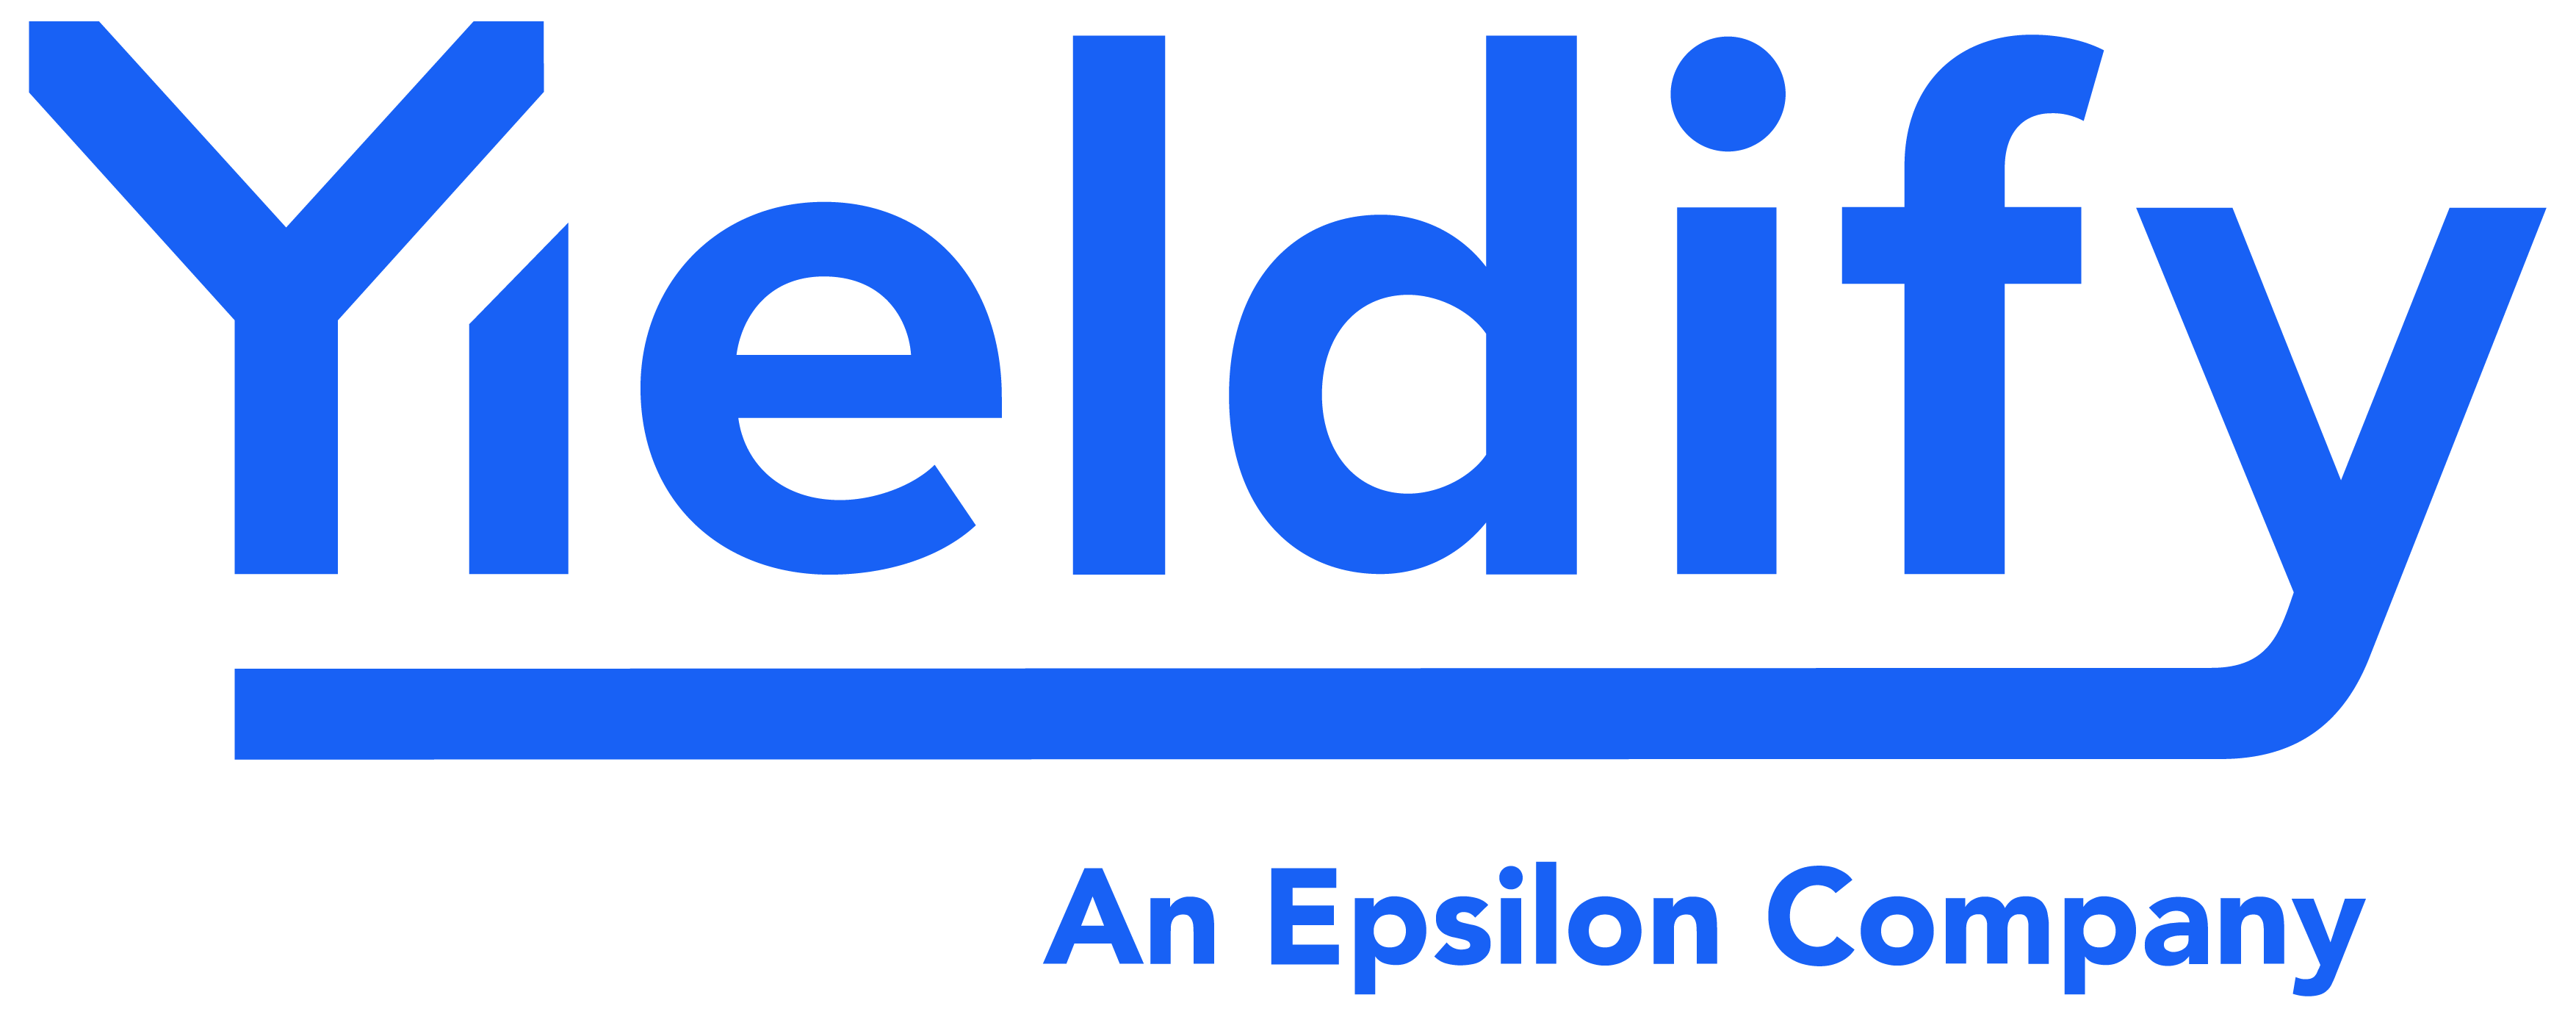 Yieldify, An Epsilon® Company